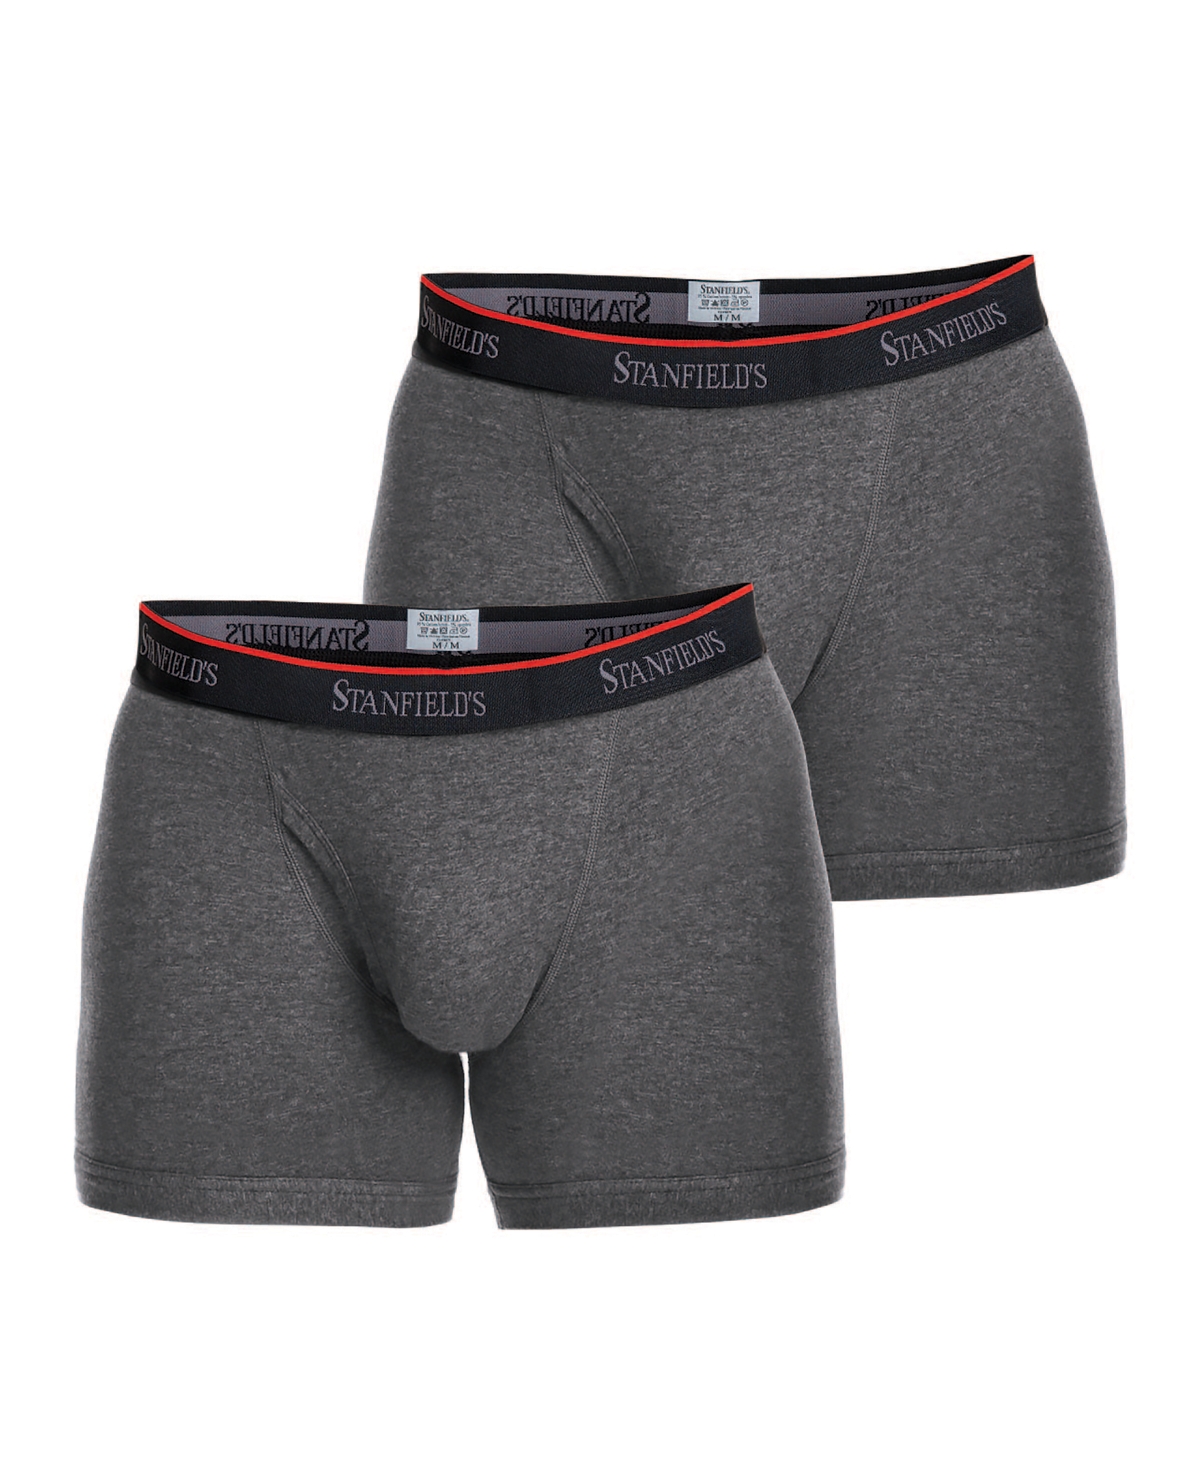 Stanfield's Men's Premium Cotton Rib Thermal Long Johns Underwear